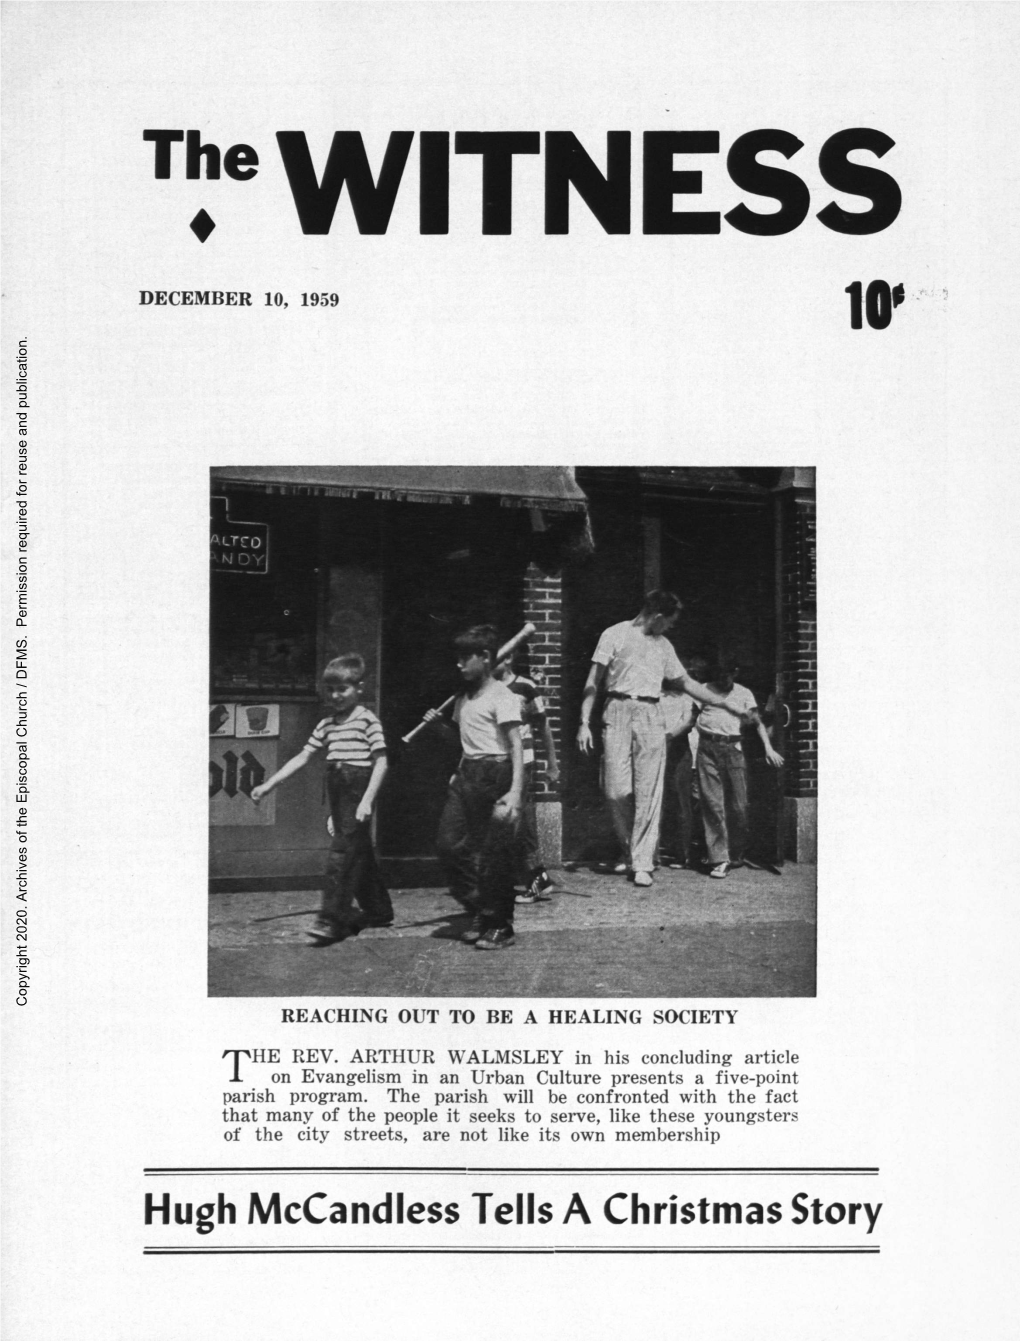 1959 the Witness, Vol. 46, No. 39. December 10, 1959